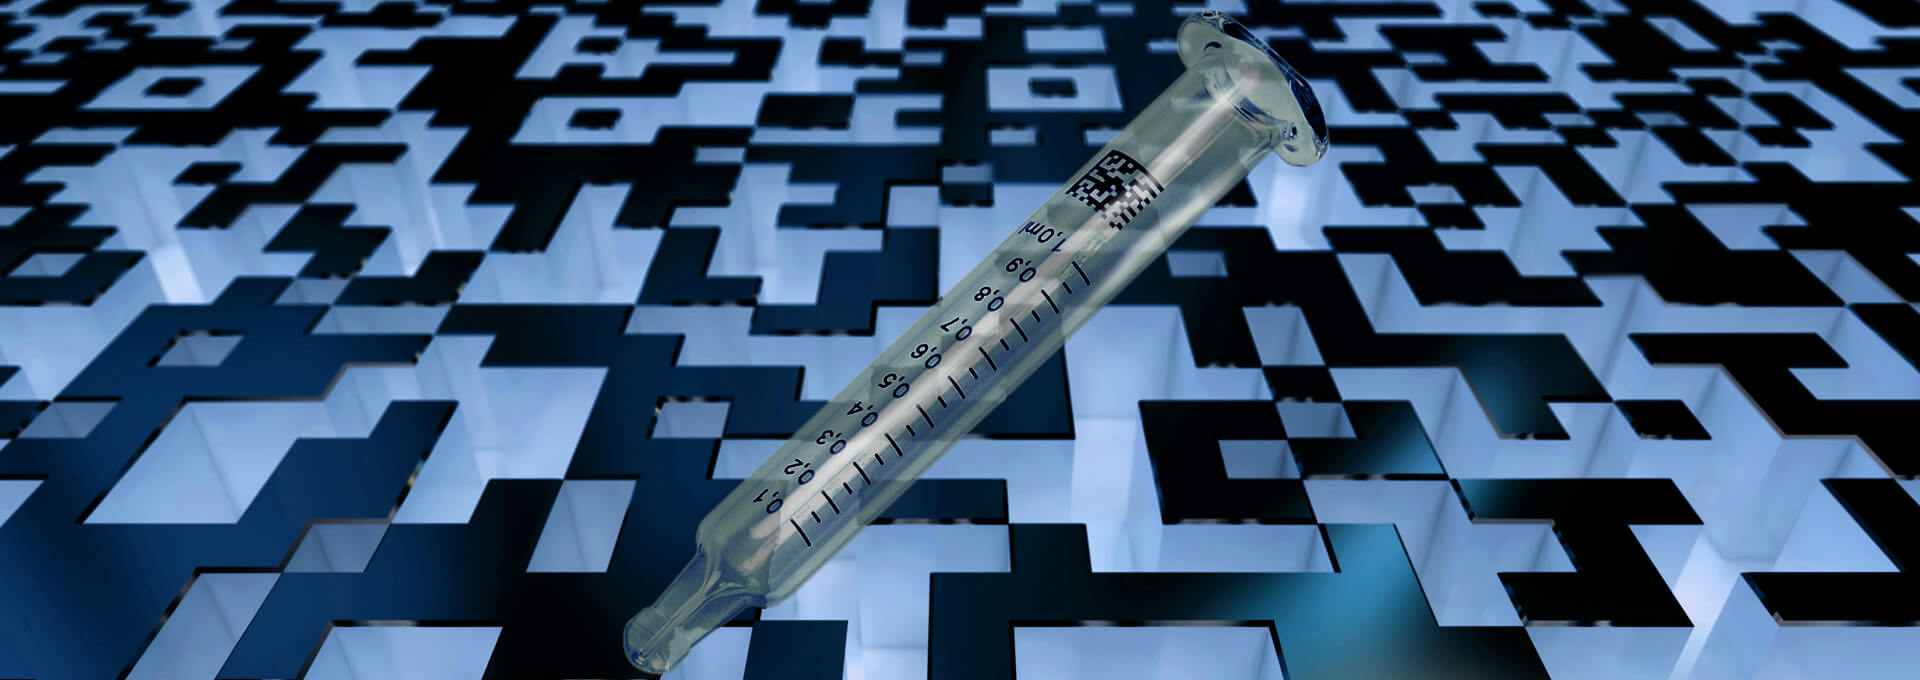 Pharma Firm Explores RFID for Prefilled Syringes